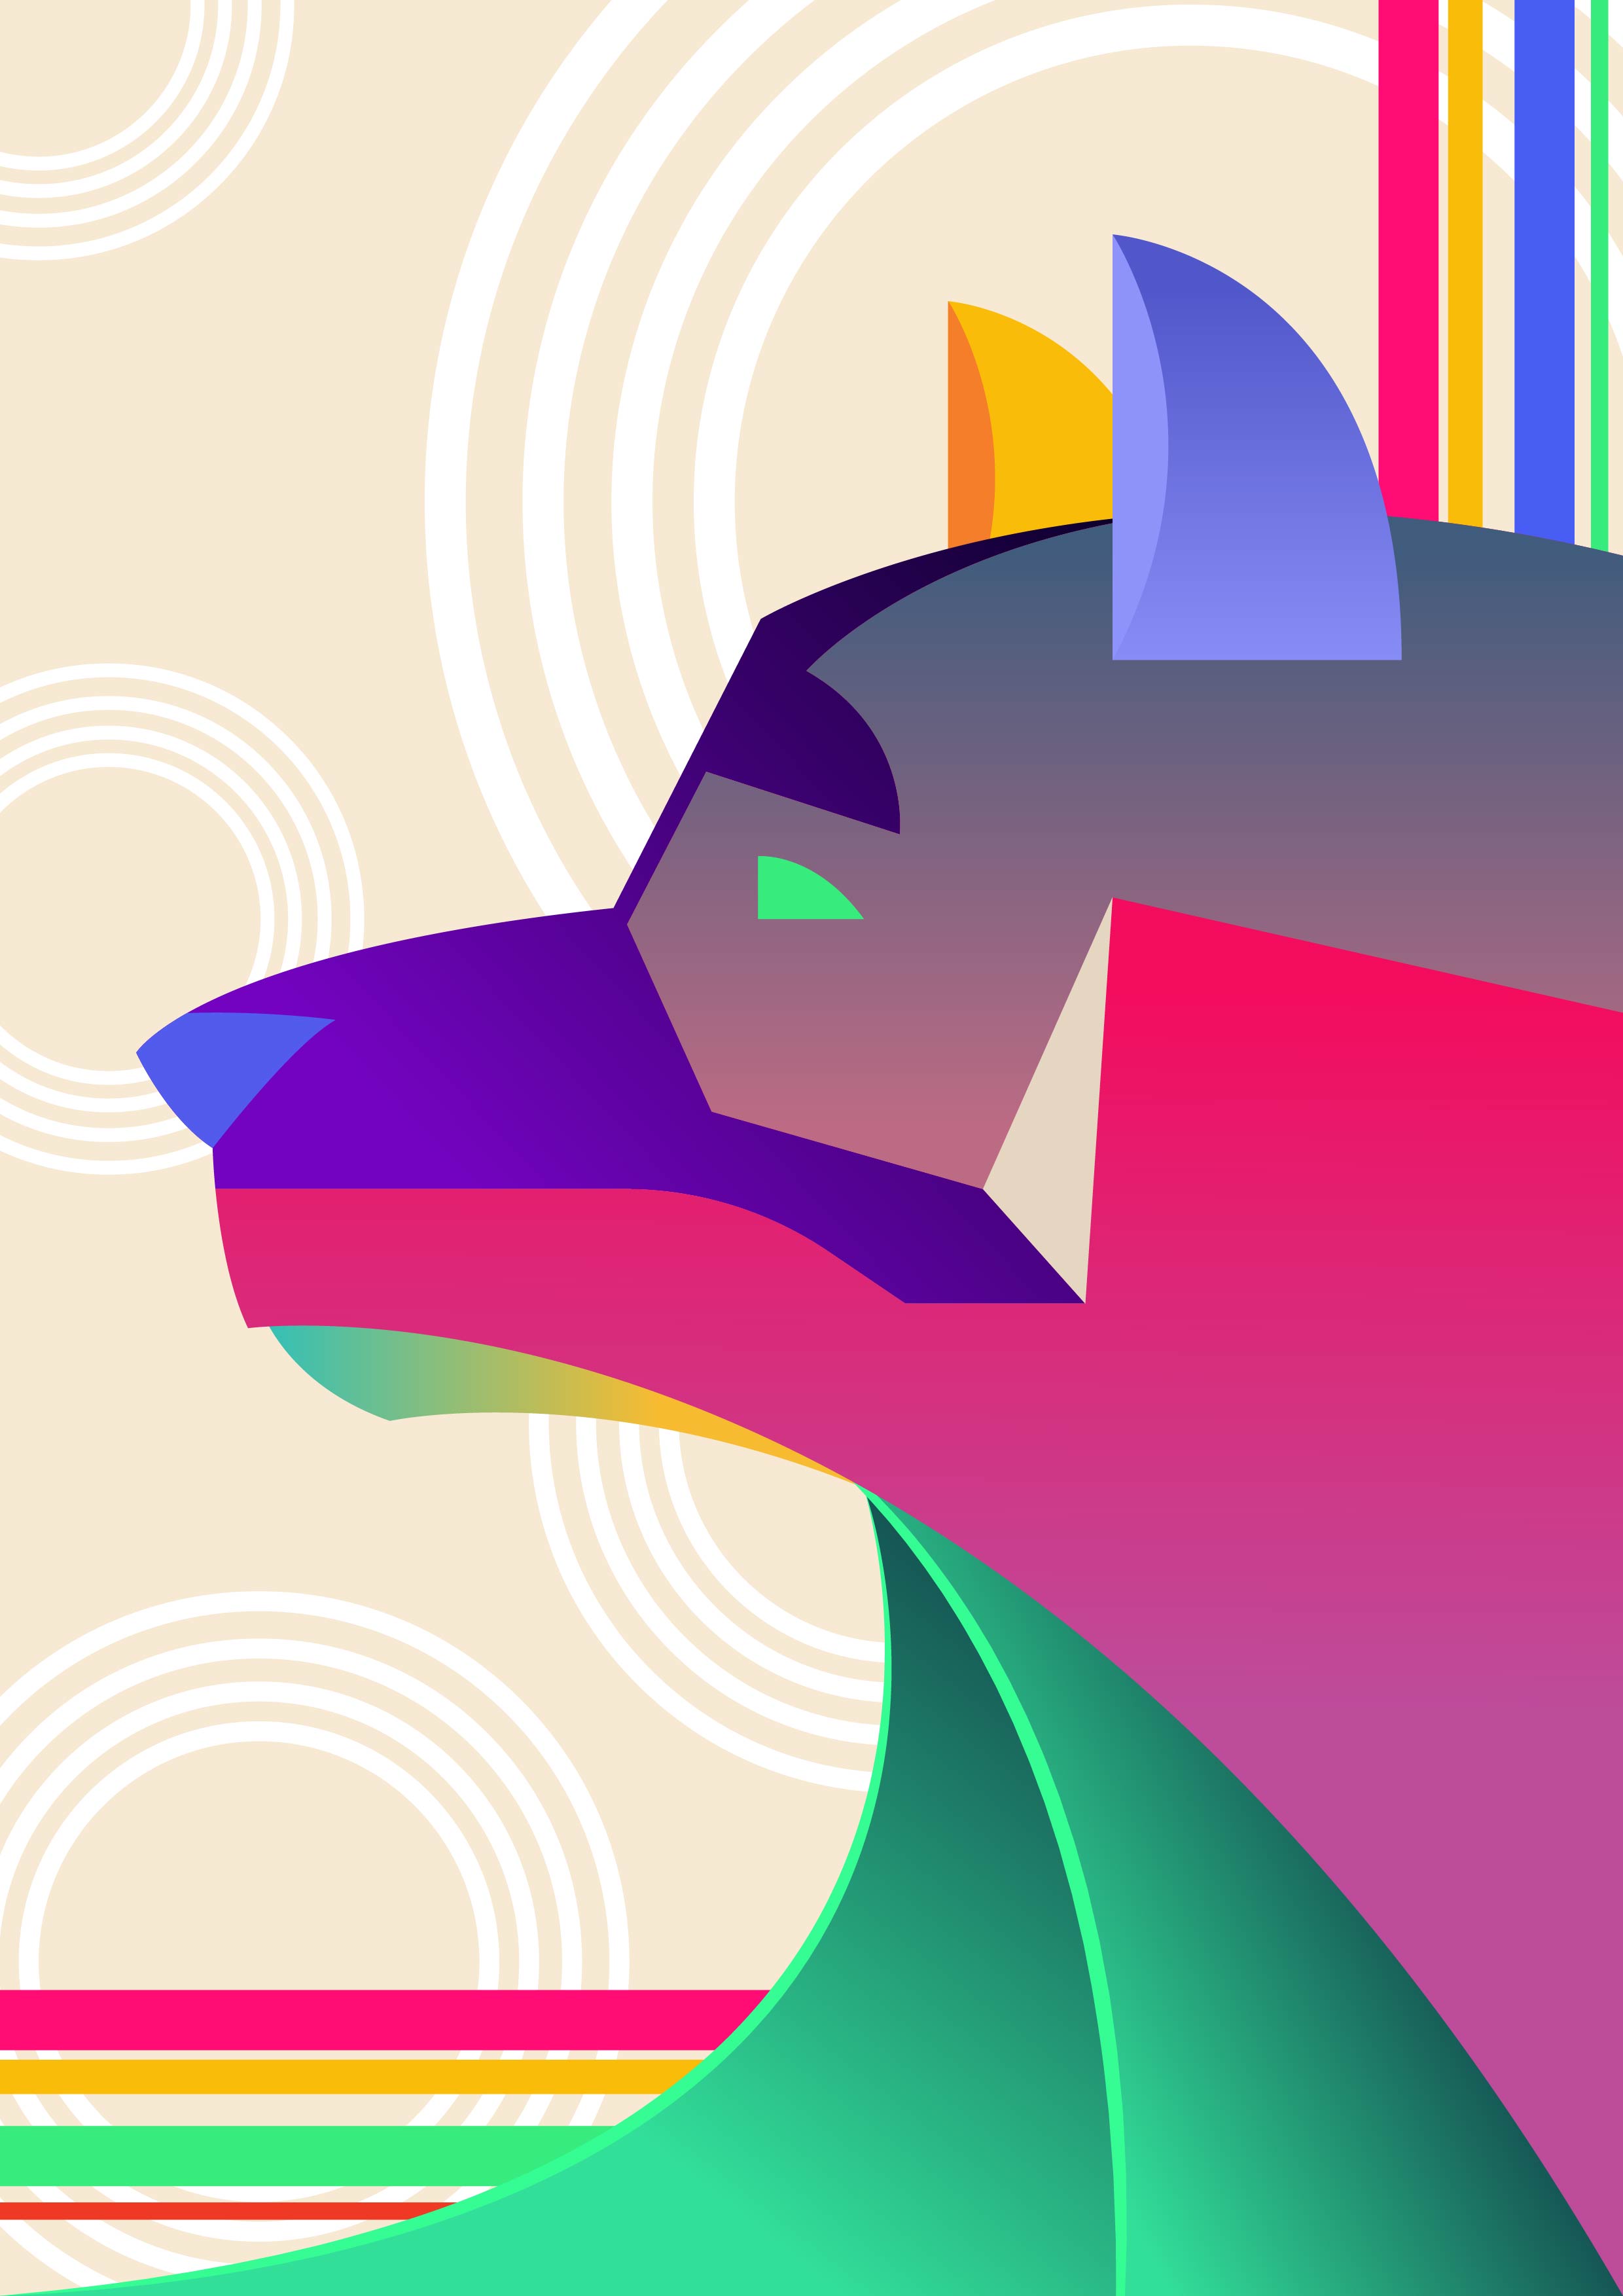 Download Abstract Dog - Download Free Vectors, Clipart Graphics & Vector Art